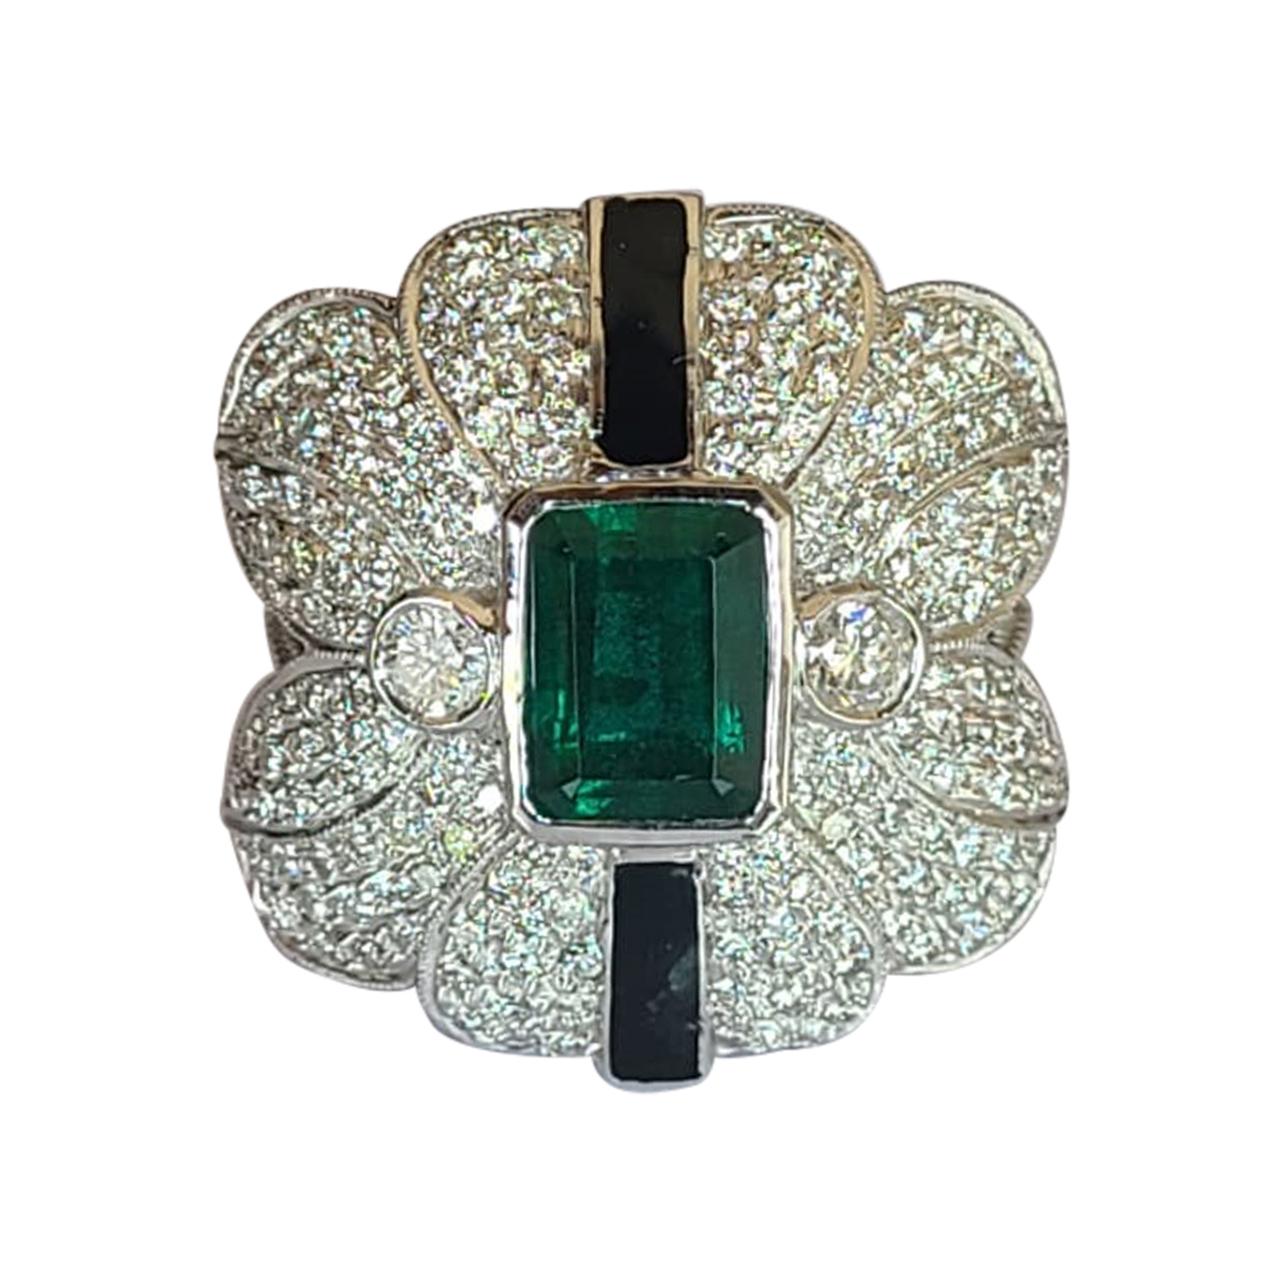 2.28 Carat Natural Emerald Diamond Ring Set with Black Enamel in 18 Karat Gold For Sale